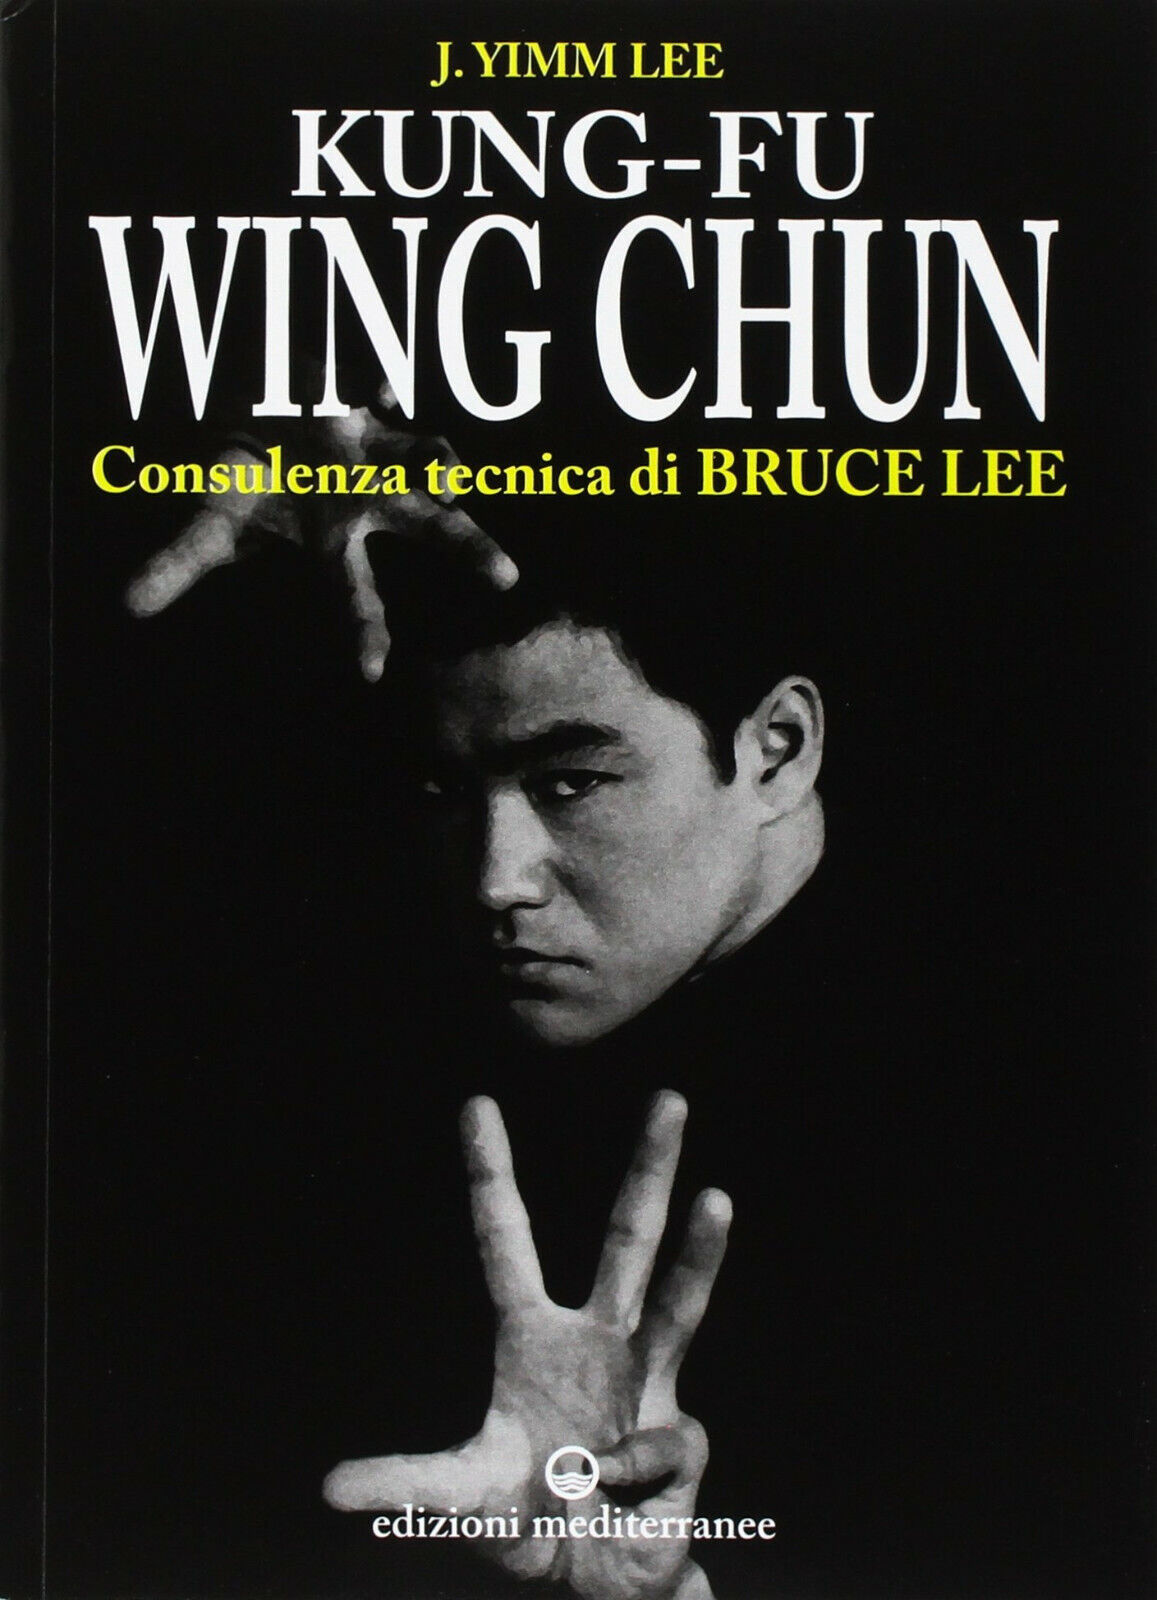 Kung fu wing chun -  Lee J. Yimm - Edizioni Mediterranee, 1998